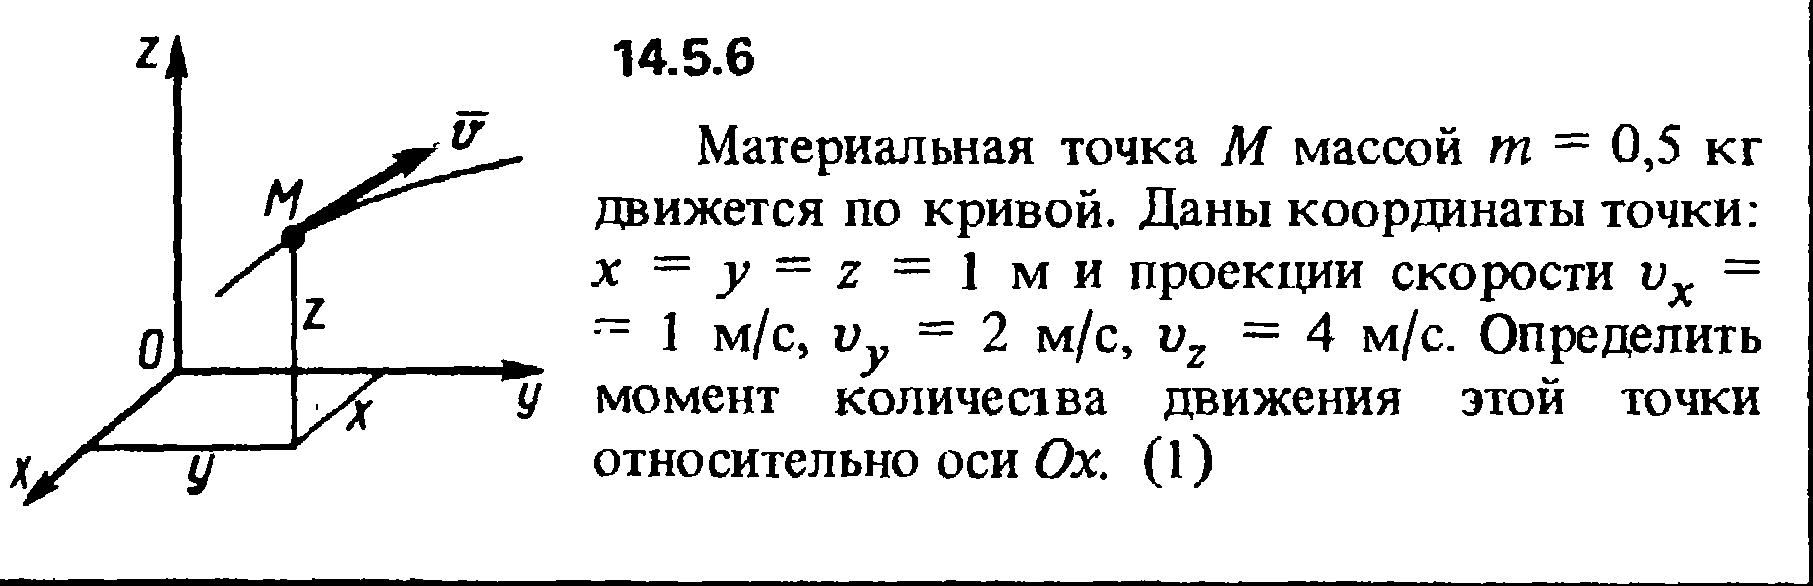 Решение задачи 14.5.6 из сборника Кепе О.Е. 1989 года